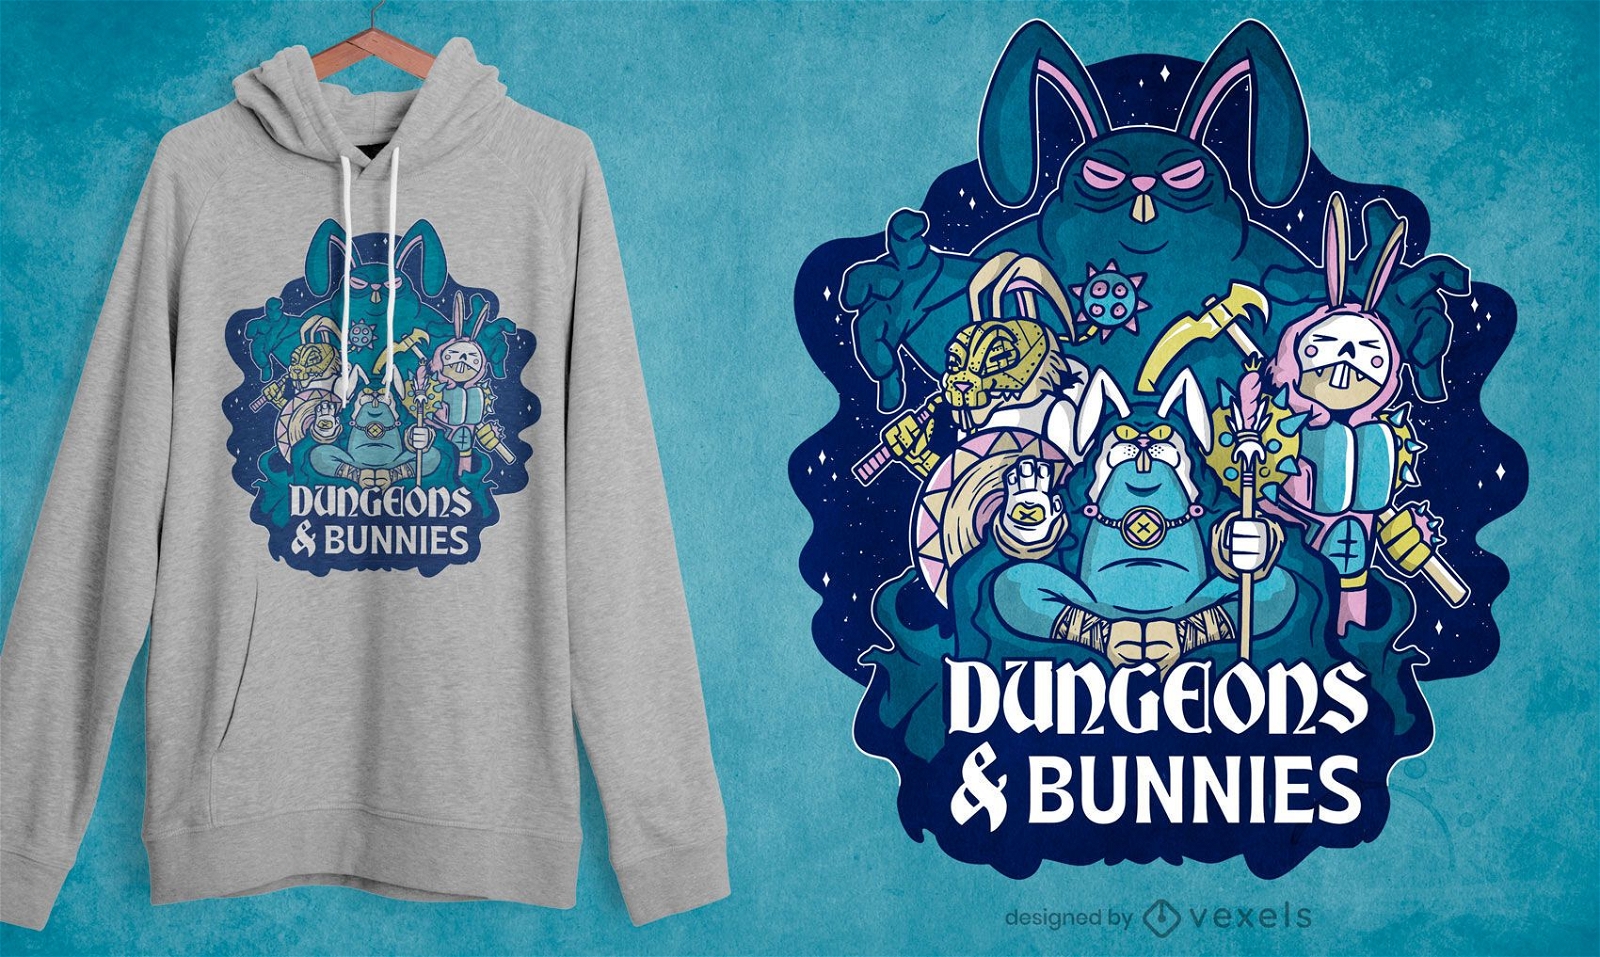 Dungeons and bunnies t-shirt design